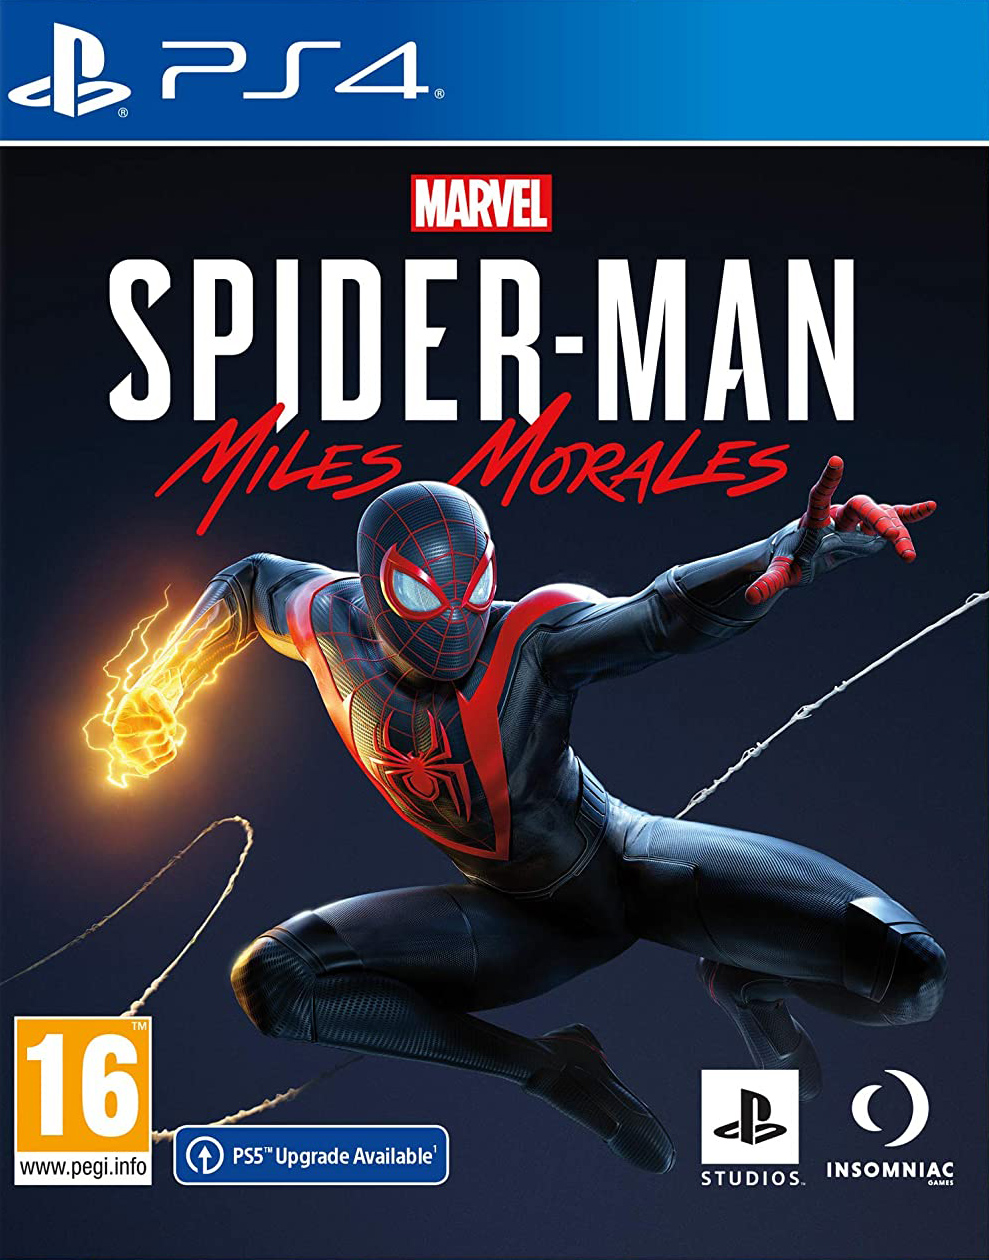 Marvels Spider-Man: Miles Morales [PS4 Exclusive]